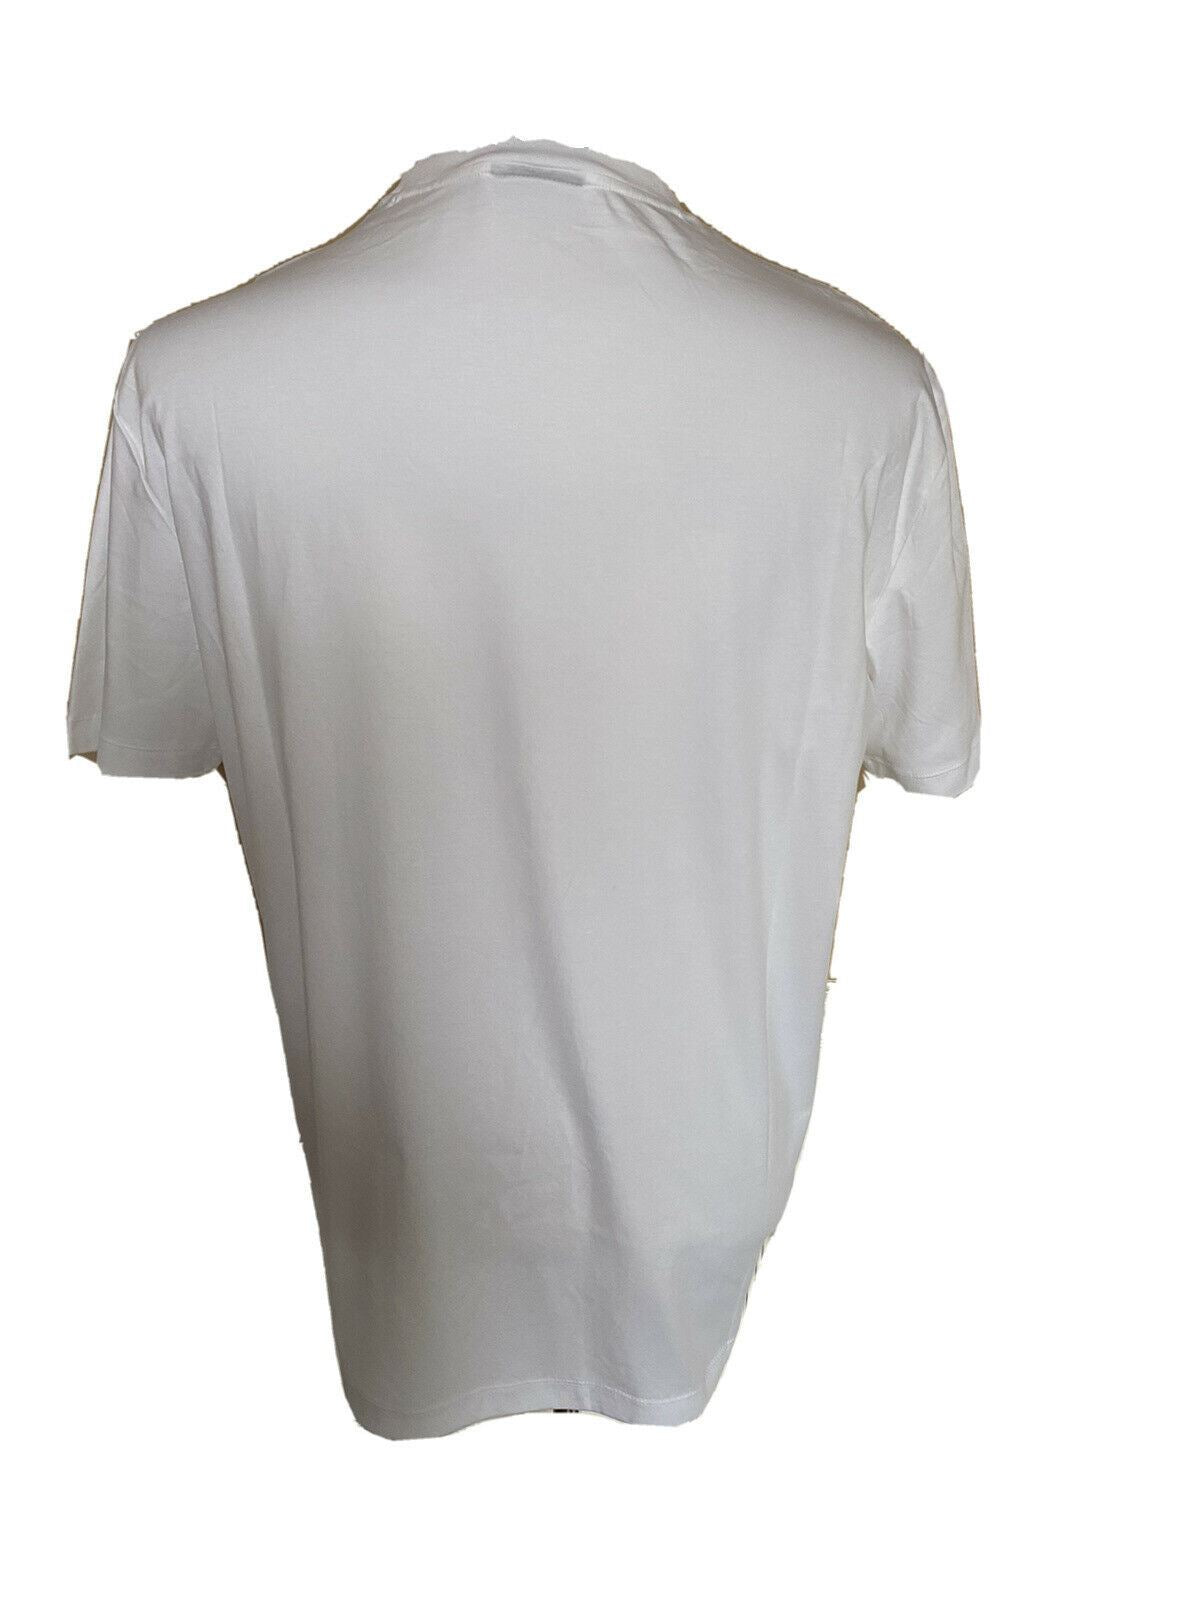 NWT $225 Emporio Armani White Short Sleeve Eagle Graphic T-Shirt 3XL 3G1T70